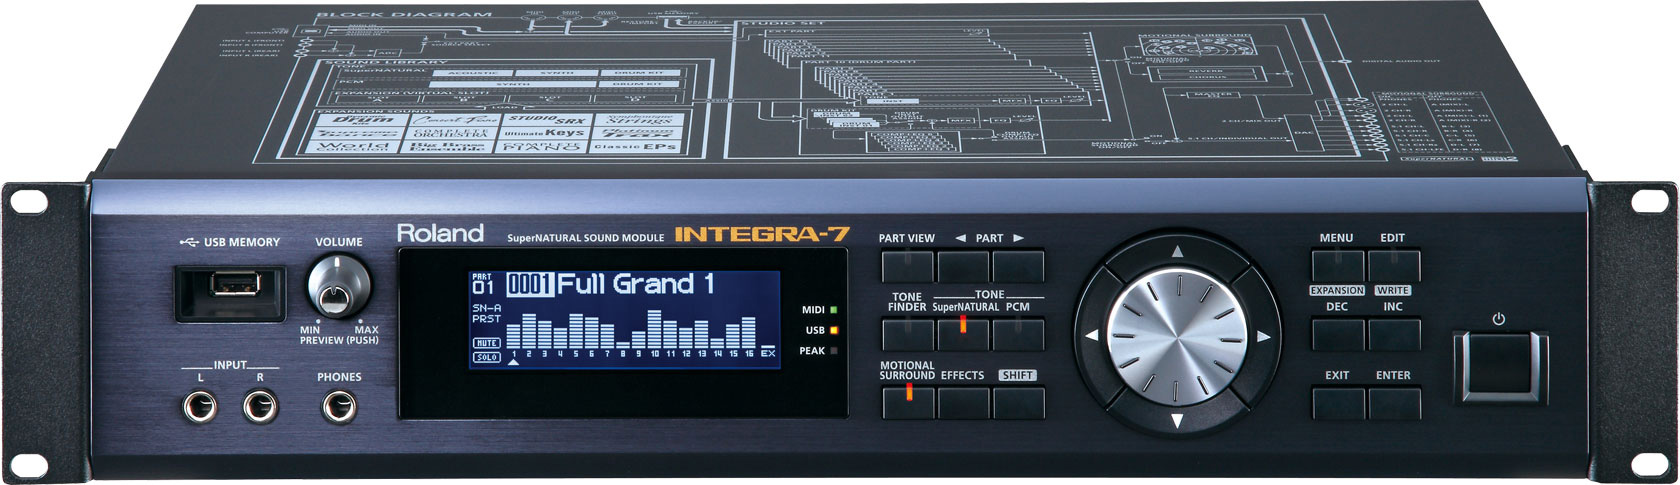 Roland INTEGRA-7 16-Part Sound Module With SuperNATURAL Engine